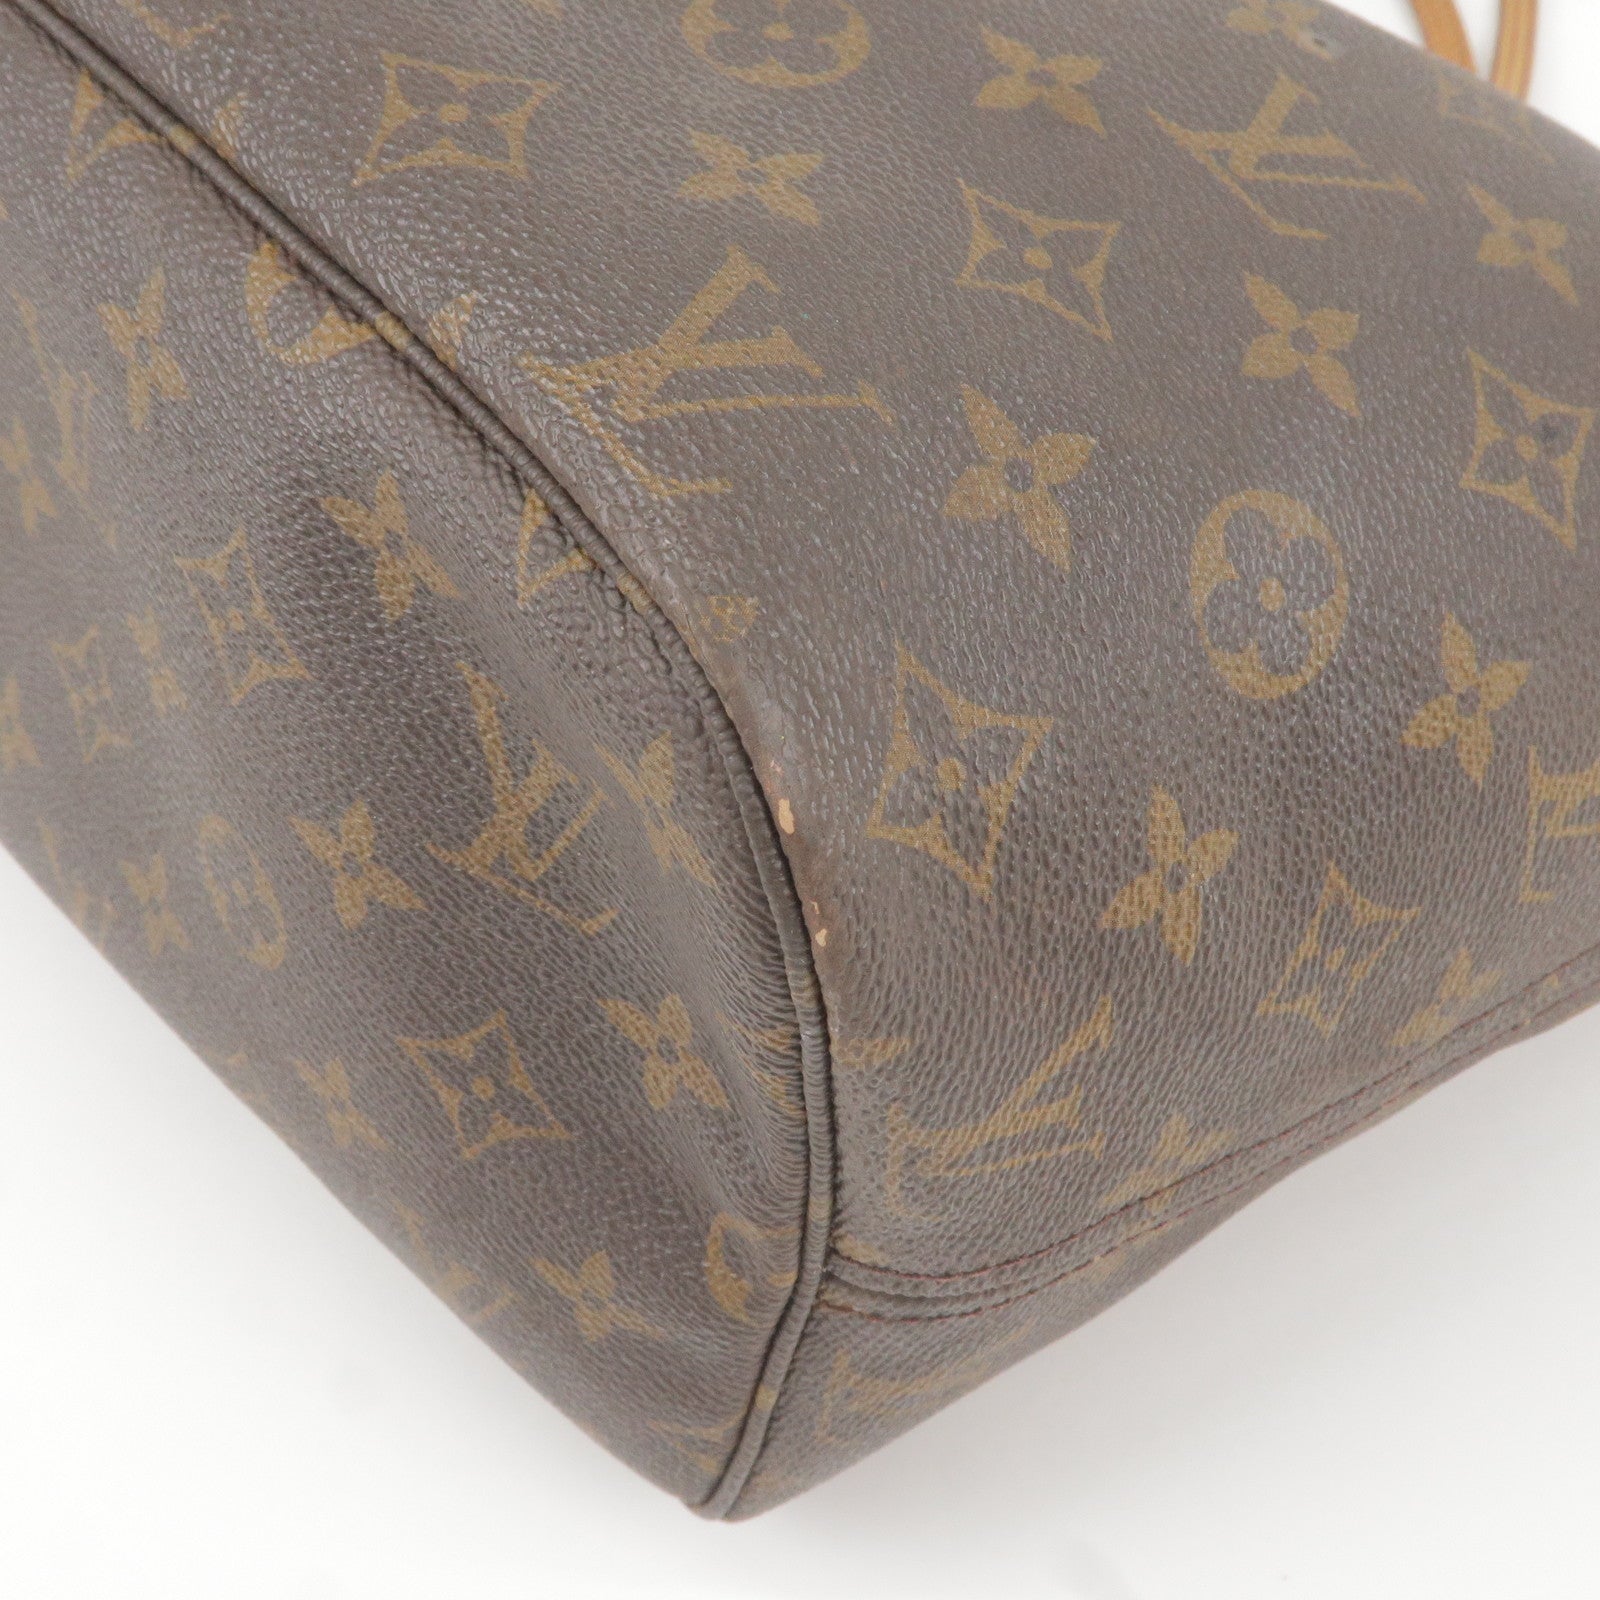 Tote - Neverfull - Monogram - ep_vintage luxury Store - Bag